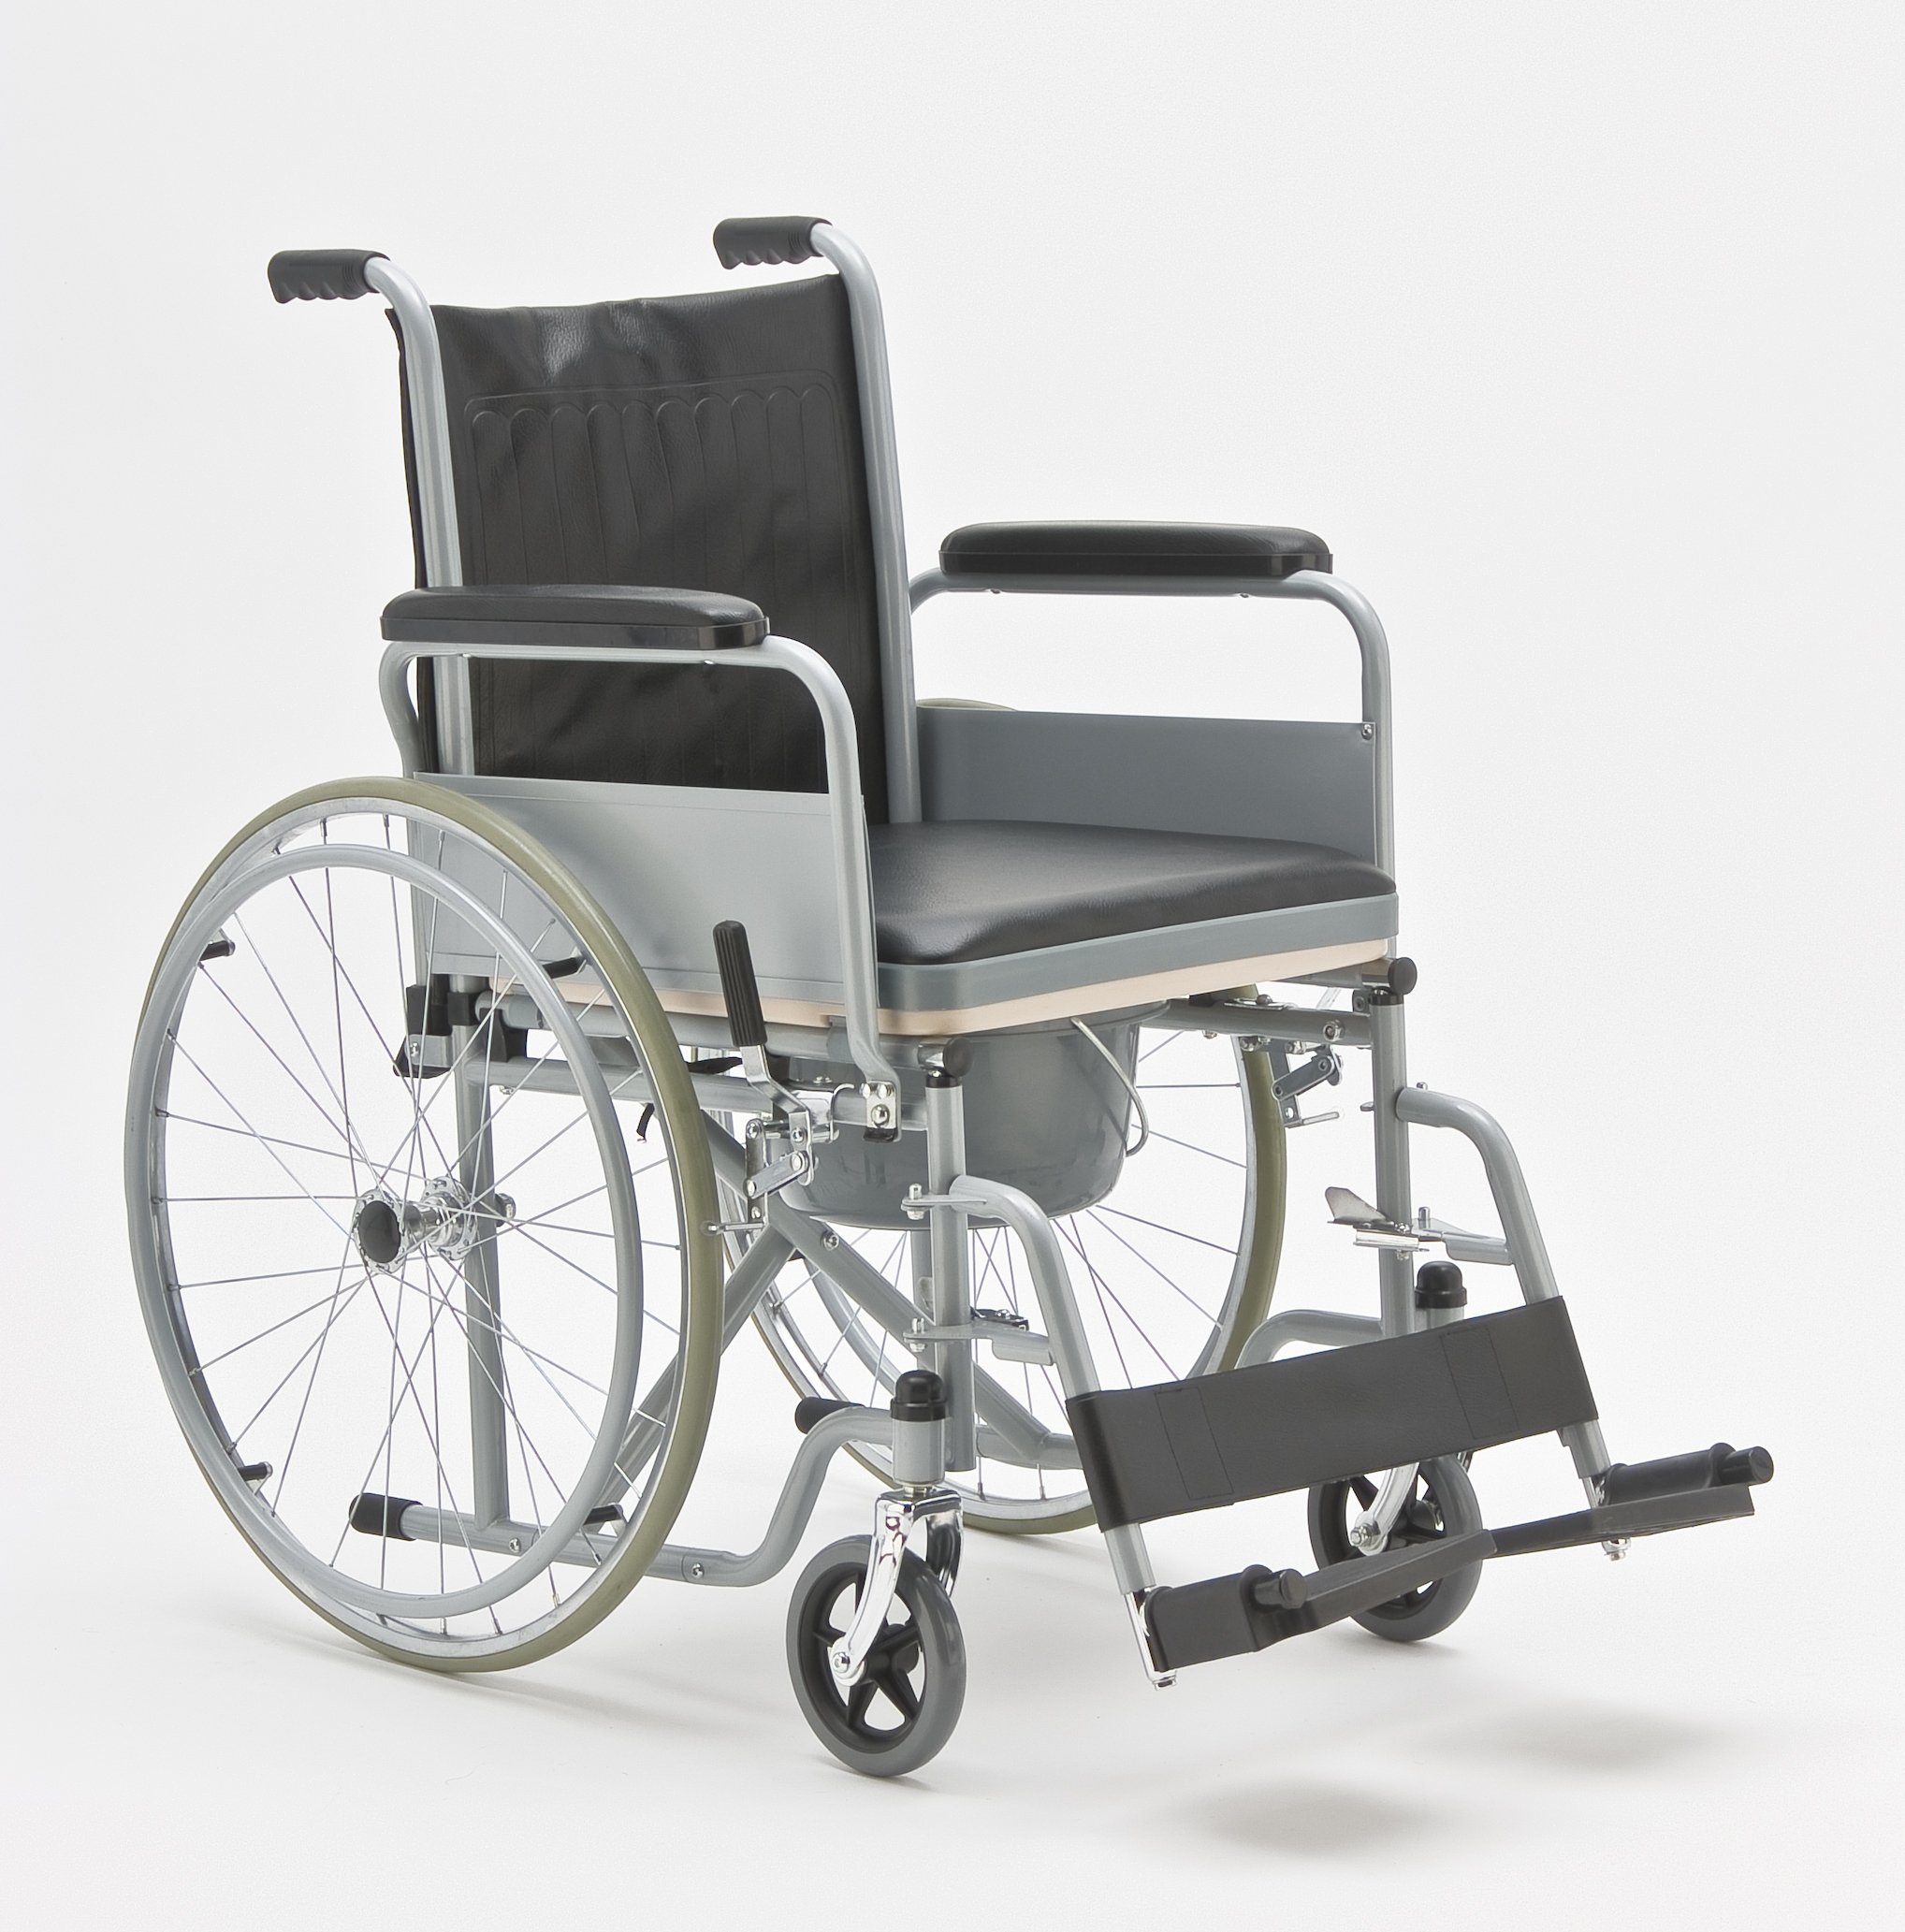 Инвалидное кресло на авито. Кресло-коляска Армед fs682. Армед кресло коляска с санитарным оснащением. Армед 682 кресло коляска. Кресло-коляска с санитарным оснащением fs682.